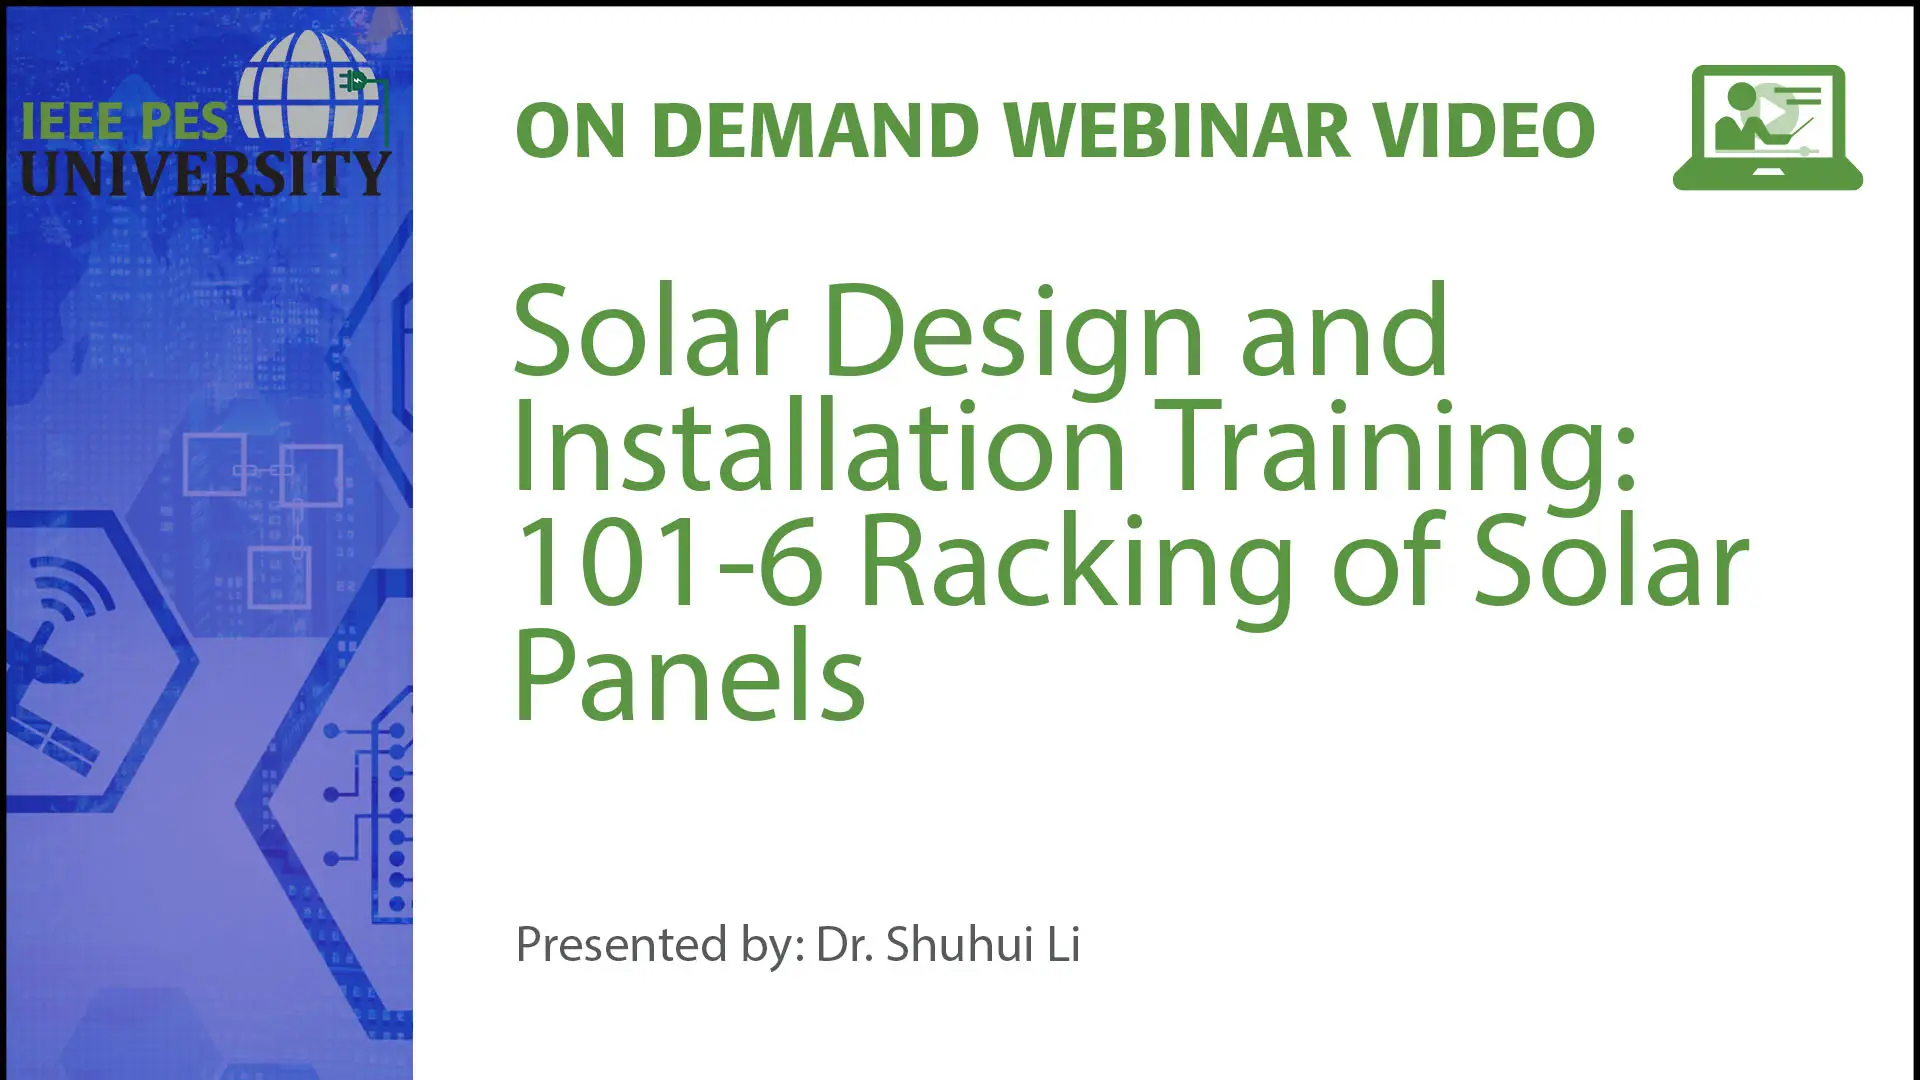 Solar Design and Installation Training: 101-6 Racking of Solar Panels (Video)